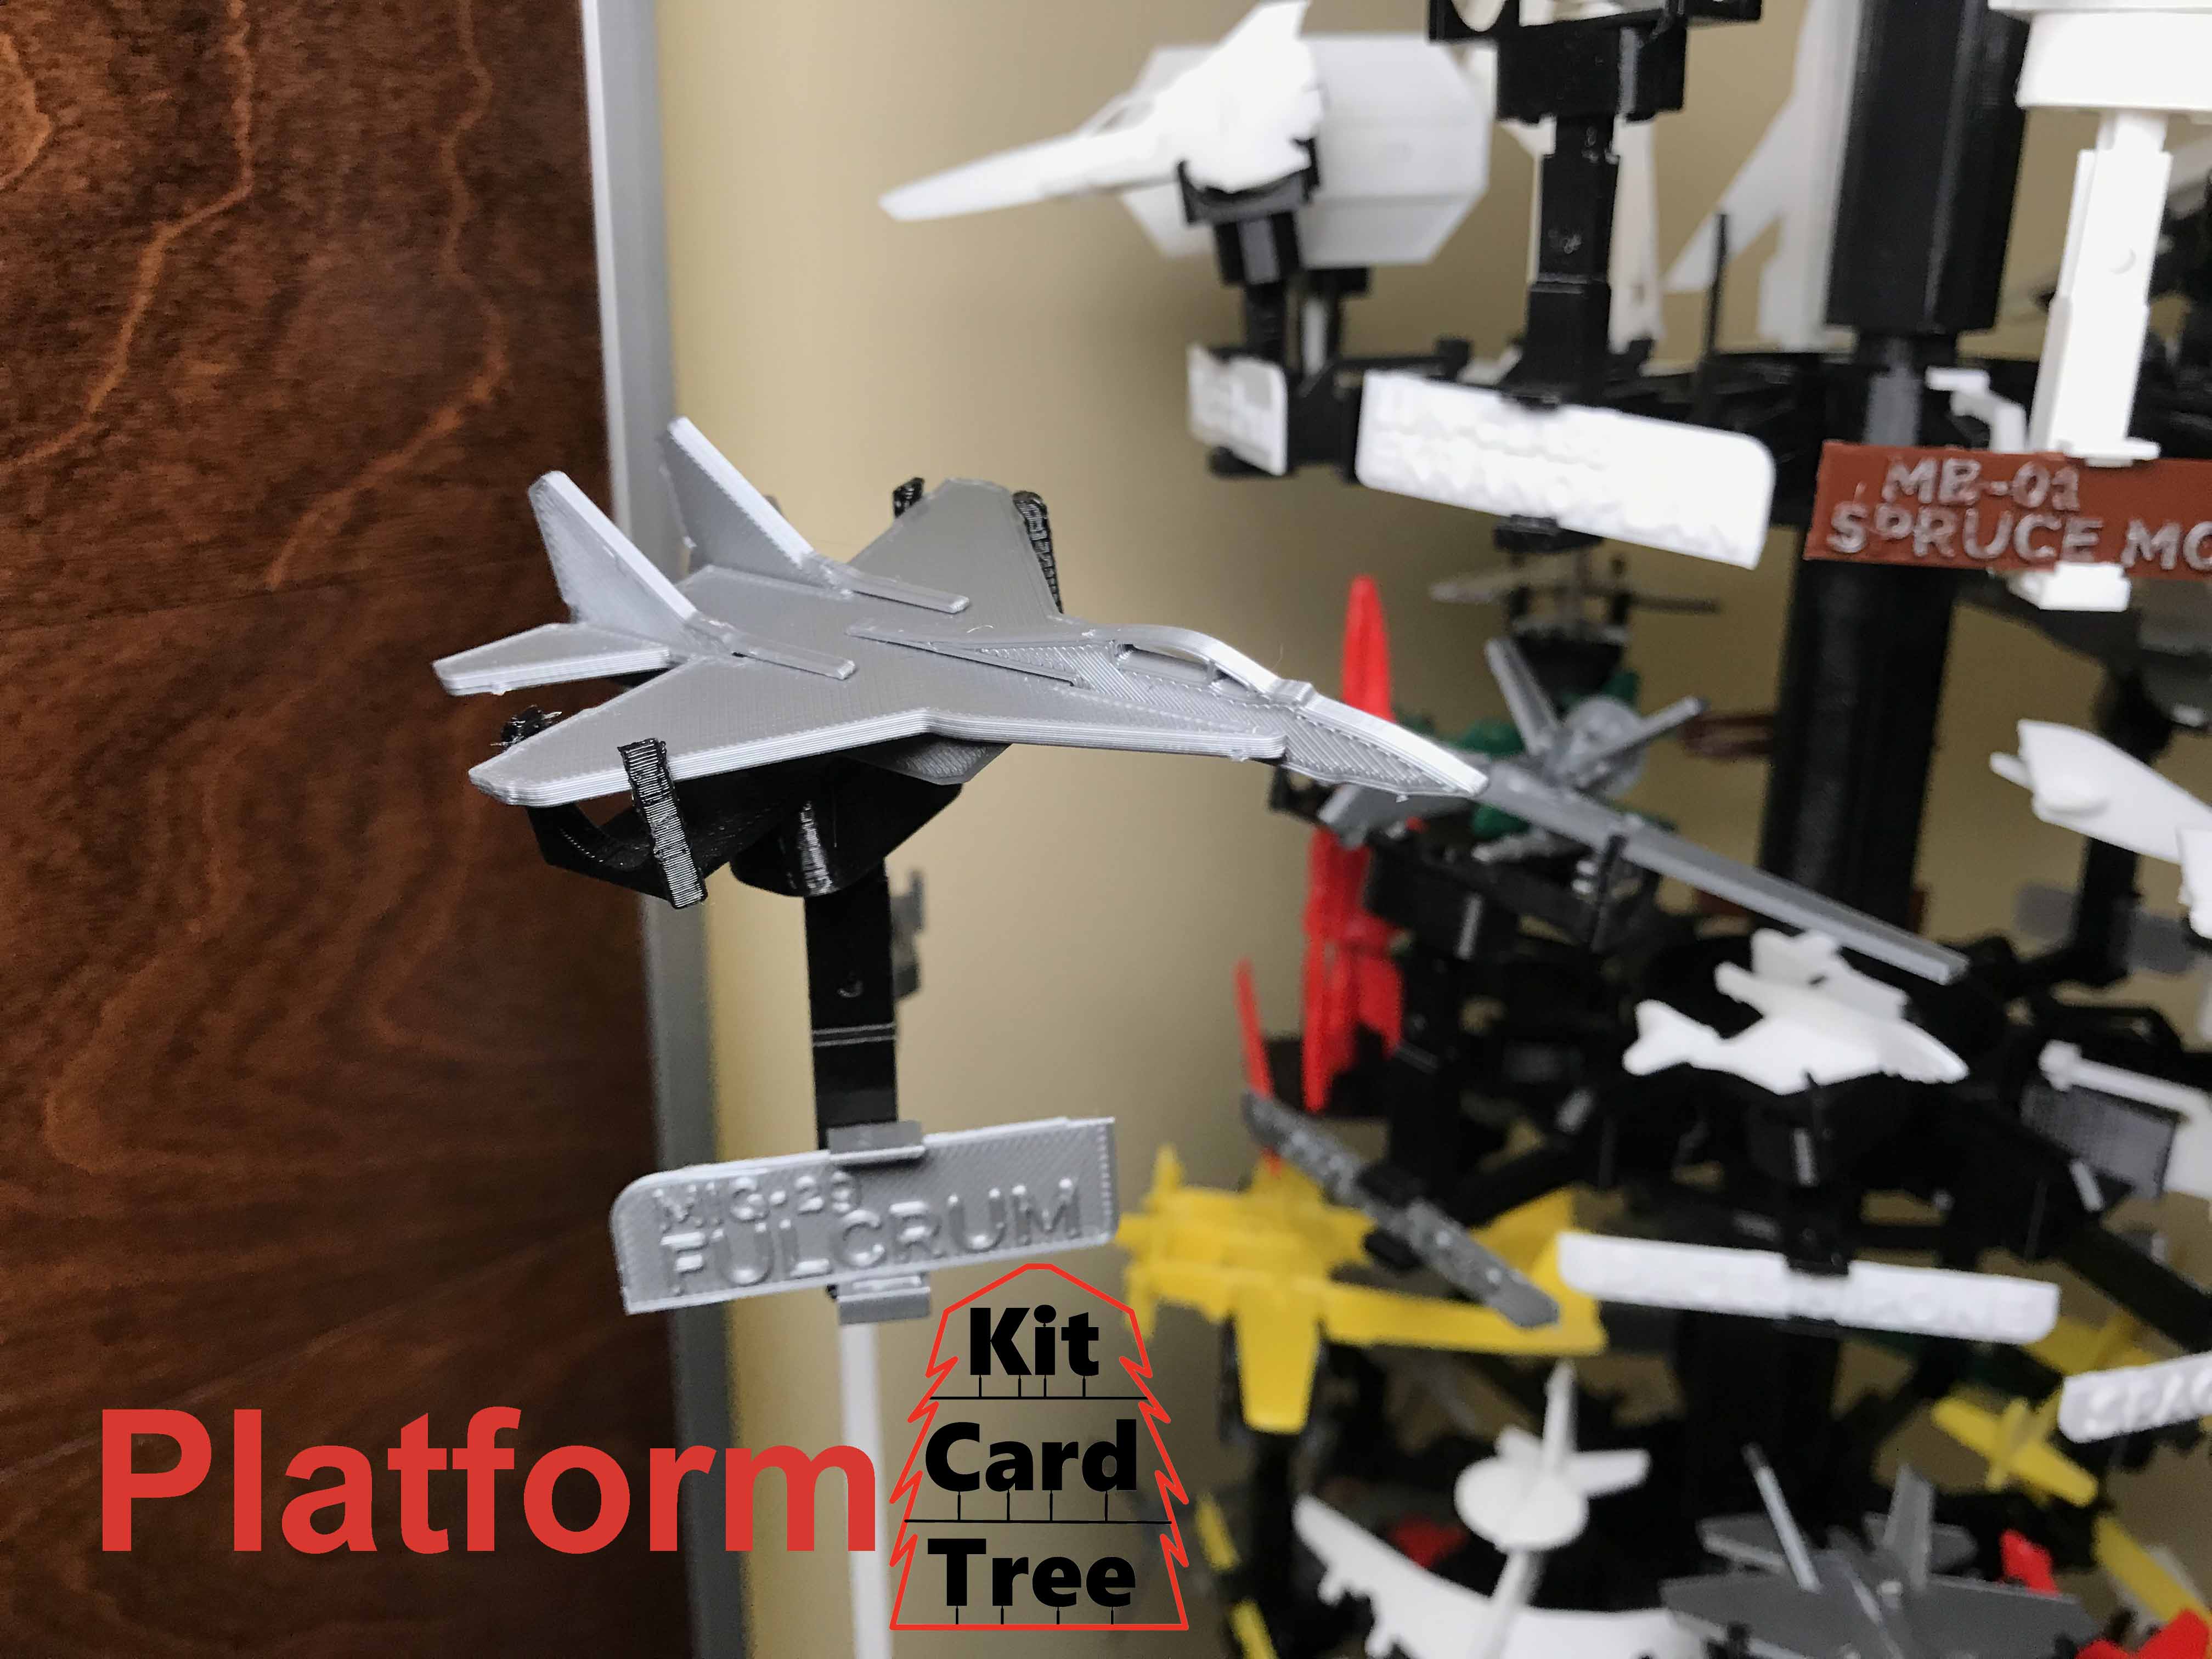 Kit Card Tree platform for MiG-29 Fulcrum by Nakozen